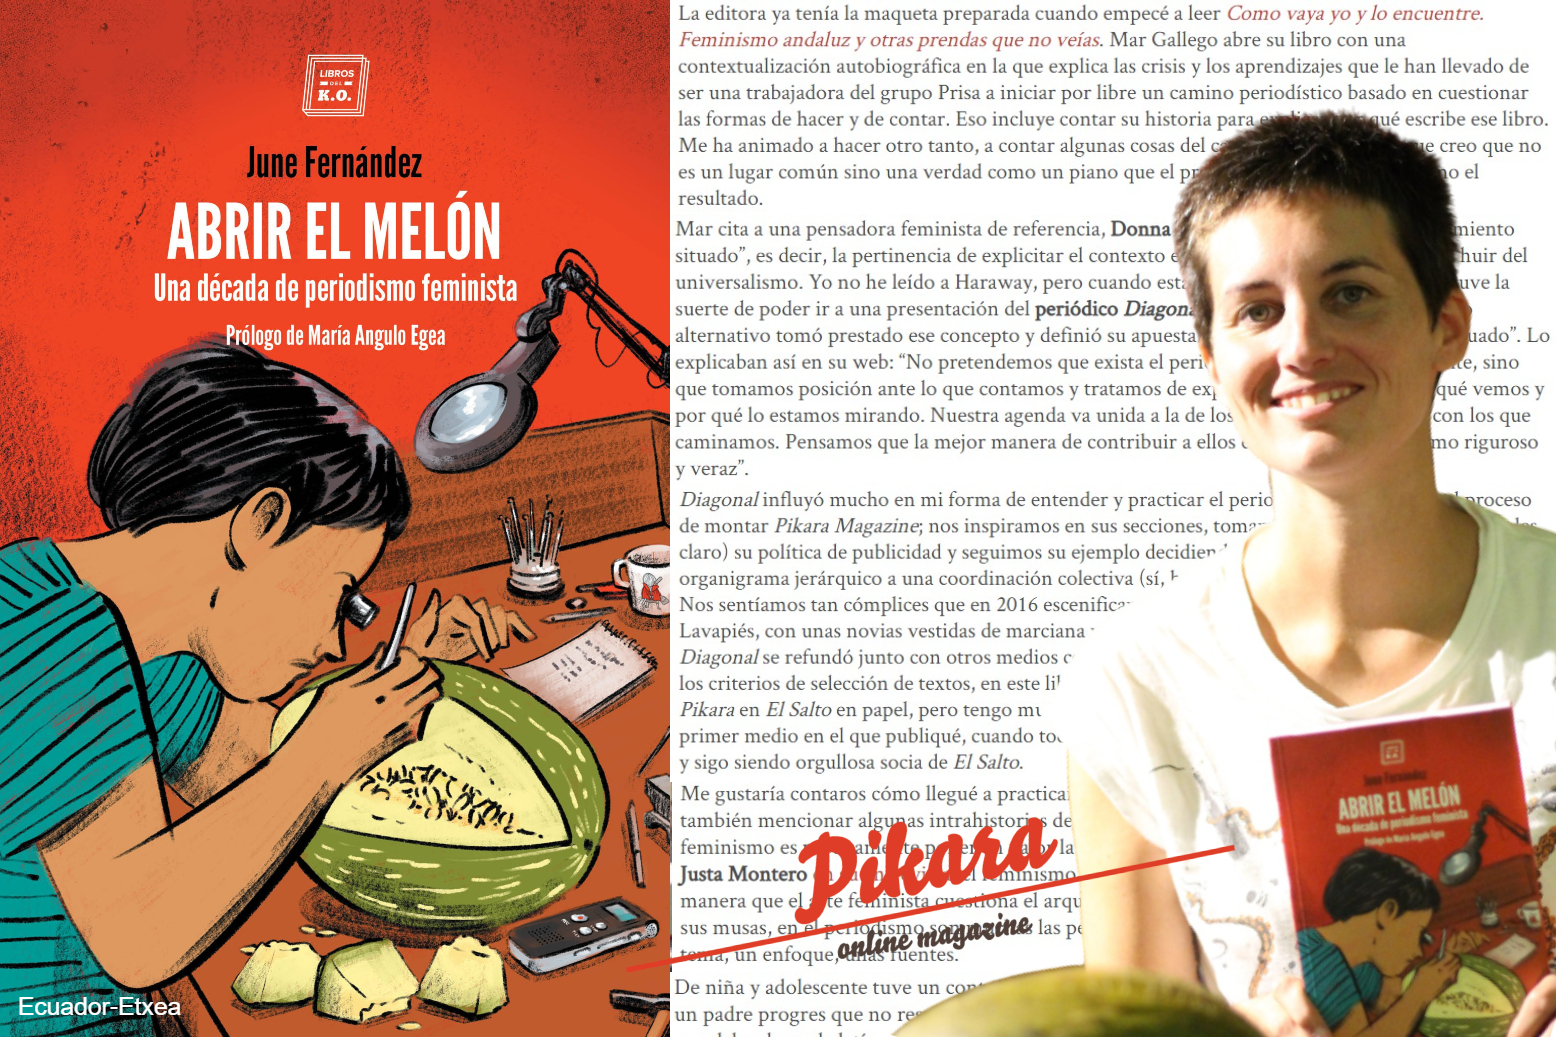 feminista-june-fernandez-pikara-magazine-revista-bilbao-vasca-libro-abrir-melón-charo-machista-periodismo-artículos